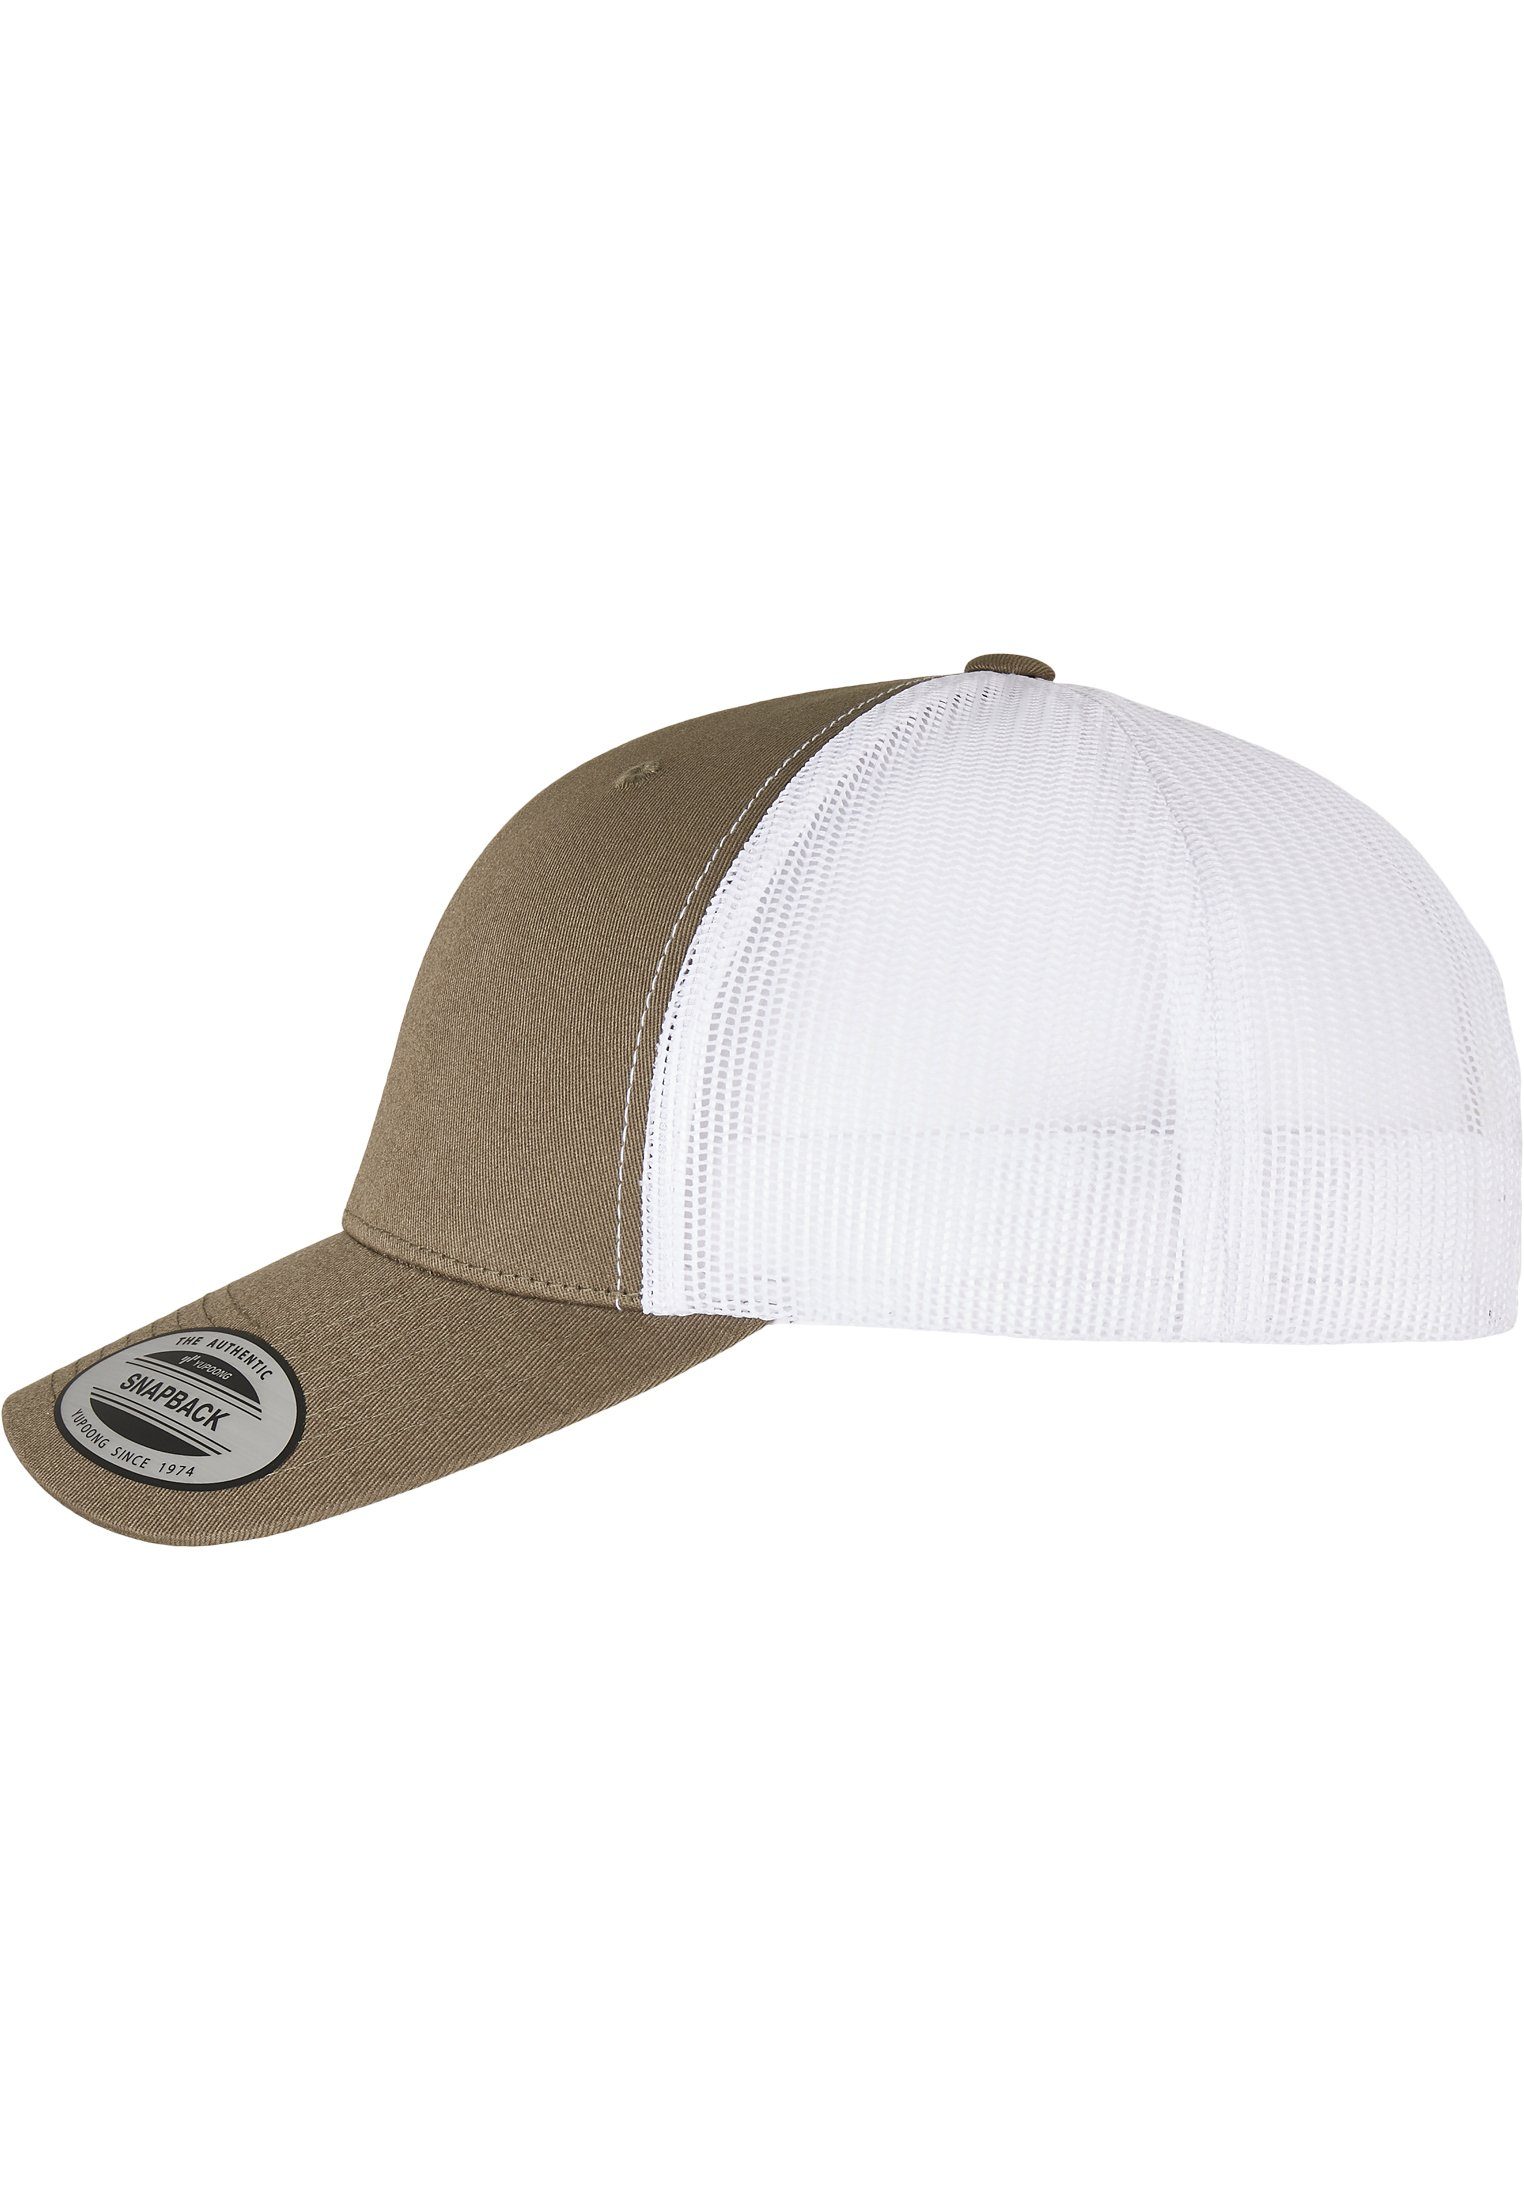 RECYCLED Cap 2-TONE RETRO CAP Flexfit Caps Flex YP olive/white CLASSICS TRUCKER